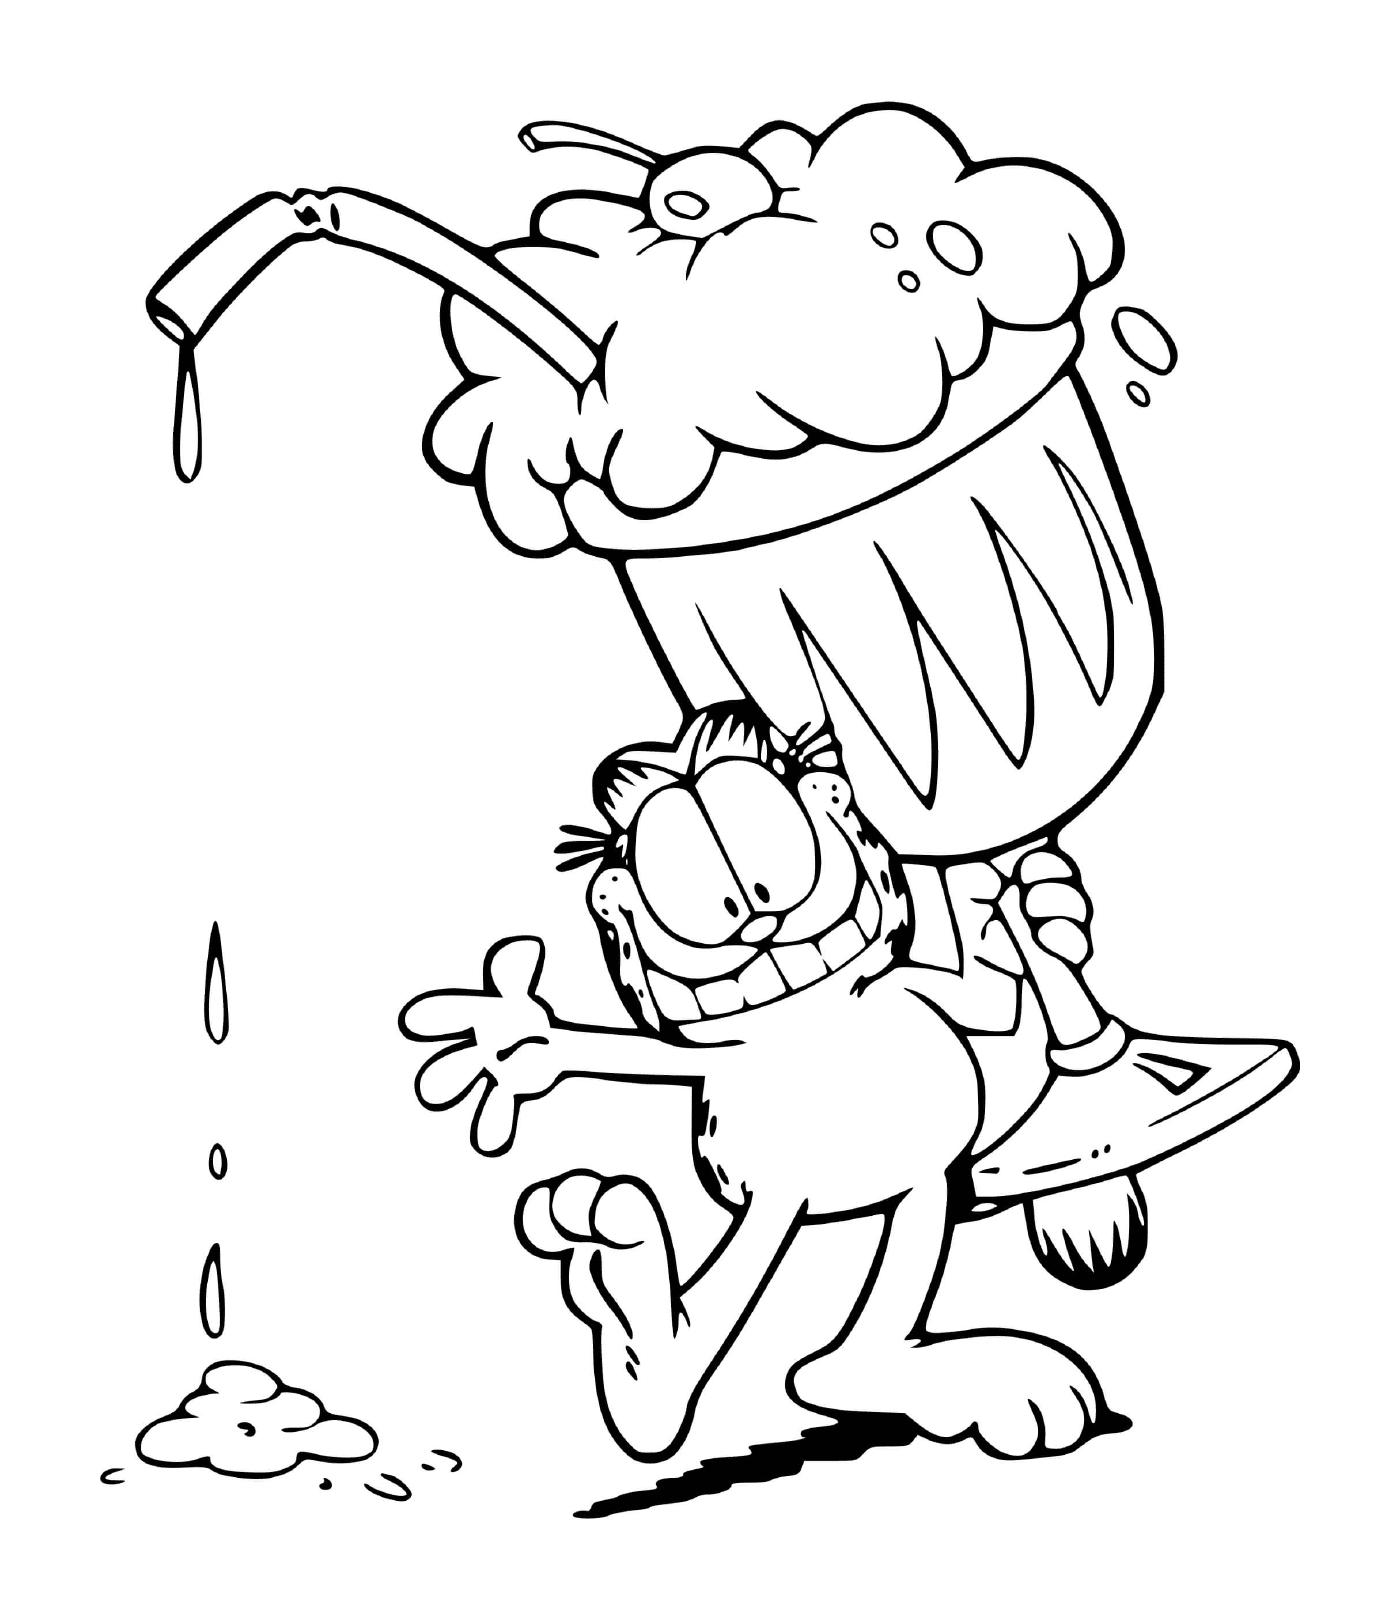   Garfield savoure une glace géante 